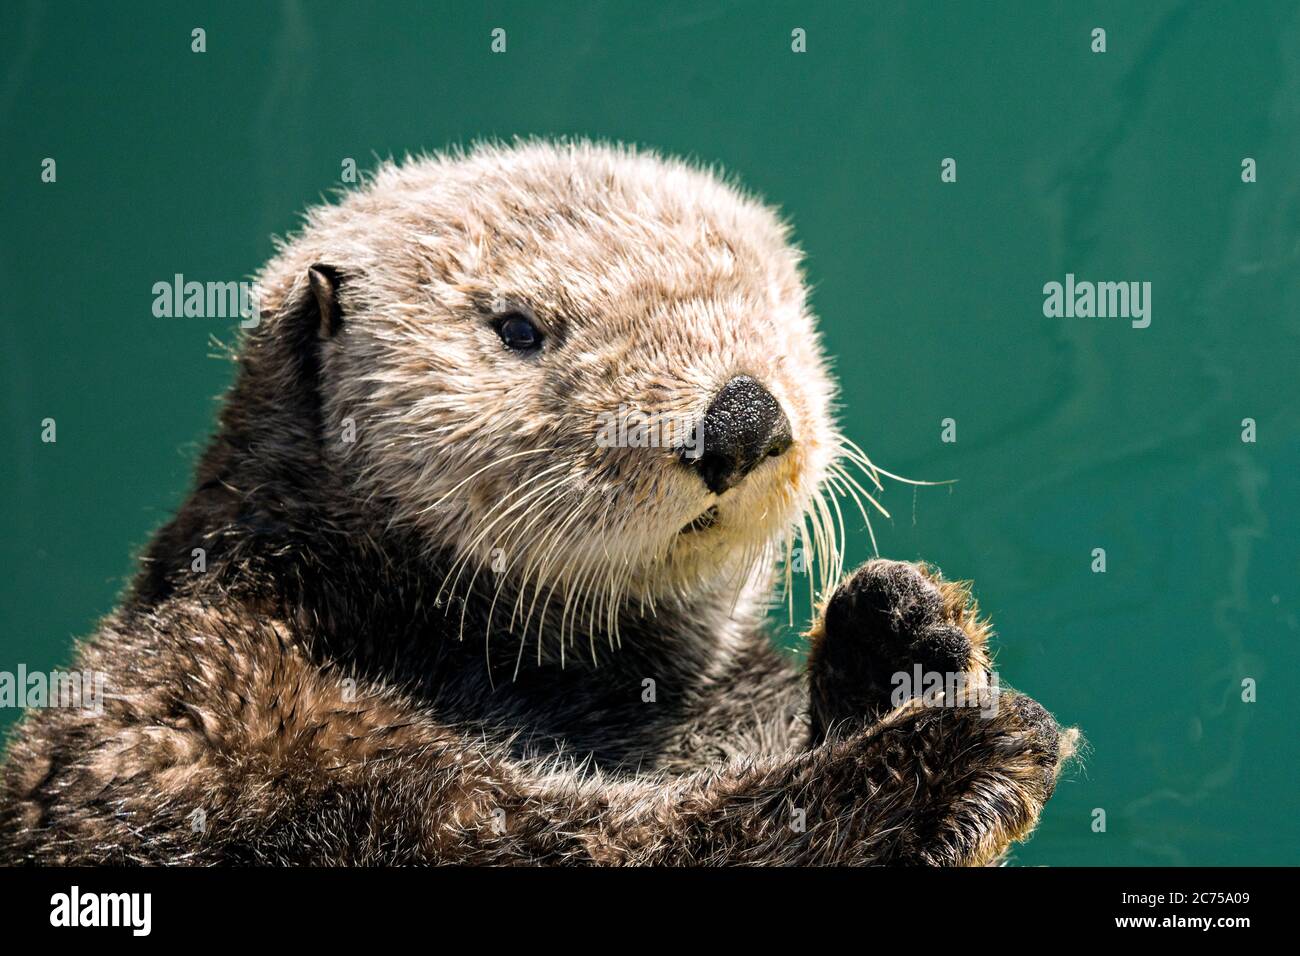 sea otter portrait Stock Photo